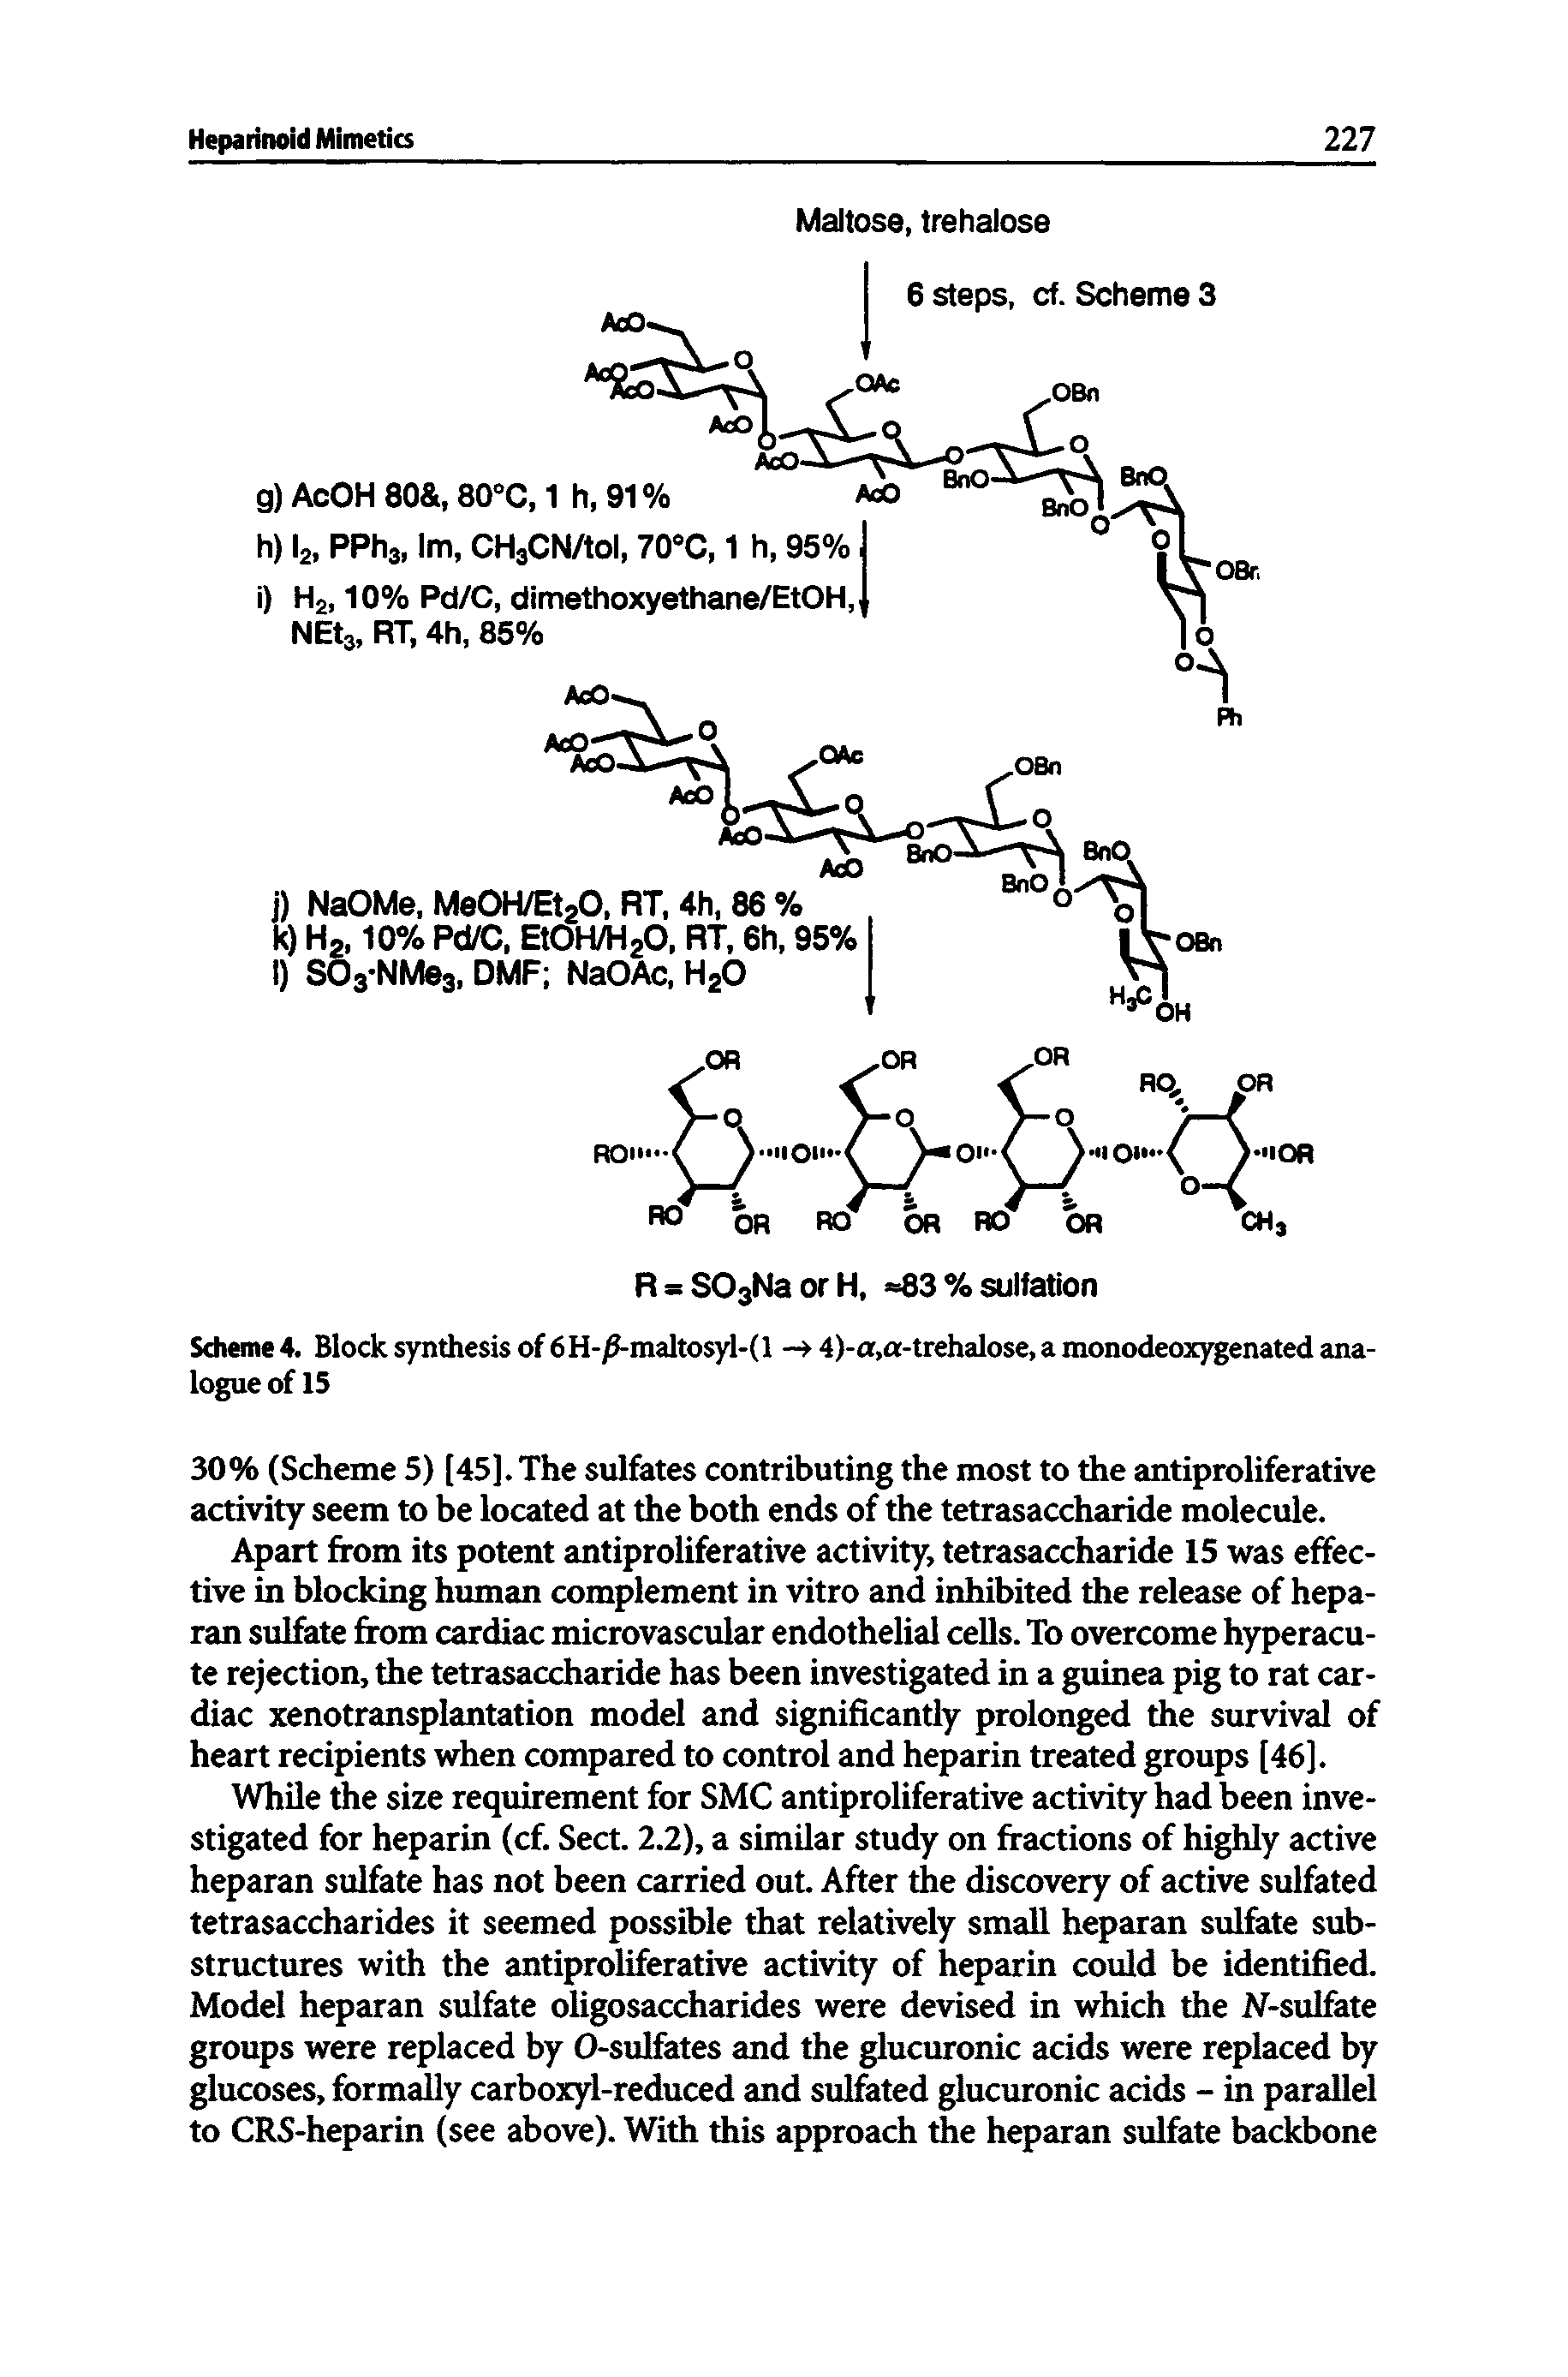 Scheme 4. Block synthesis of 6H- maltosyl-(l 4)-a,a-trehalose, a monodeox) enated analogue of 15...